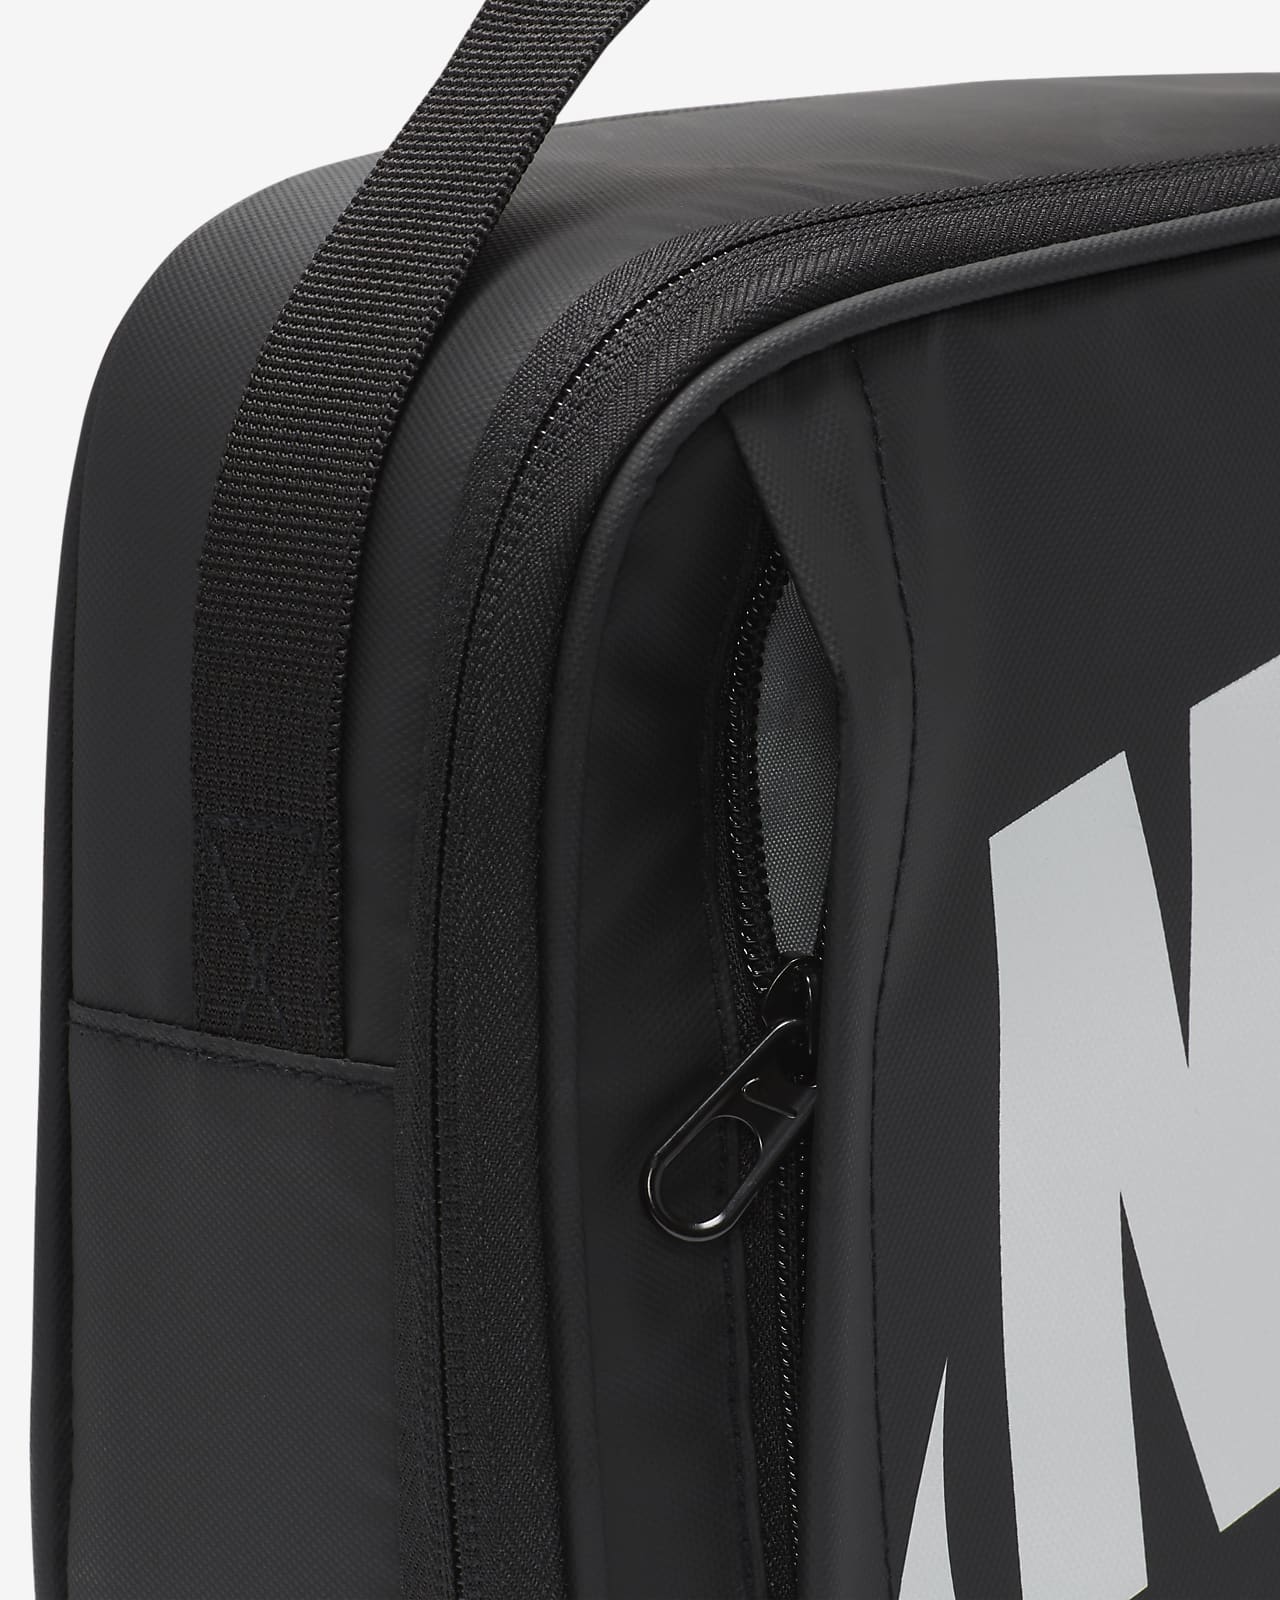 Nike Futura Sport Black Lunch Bag